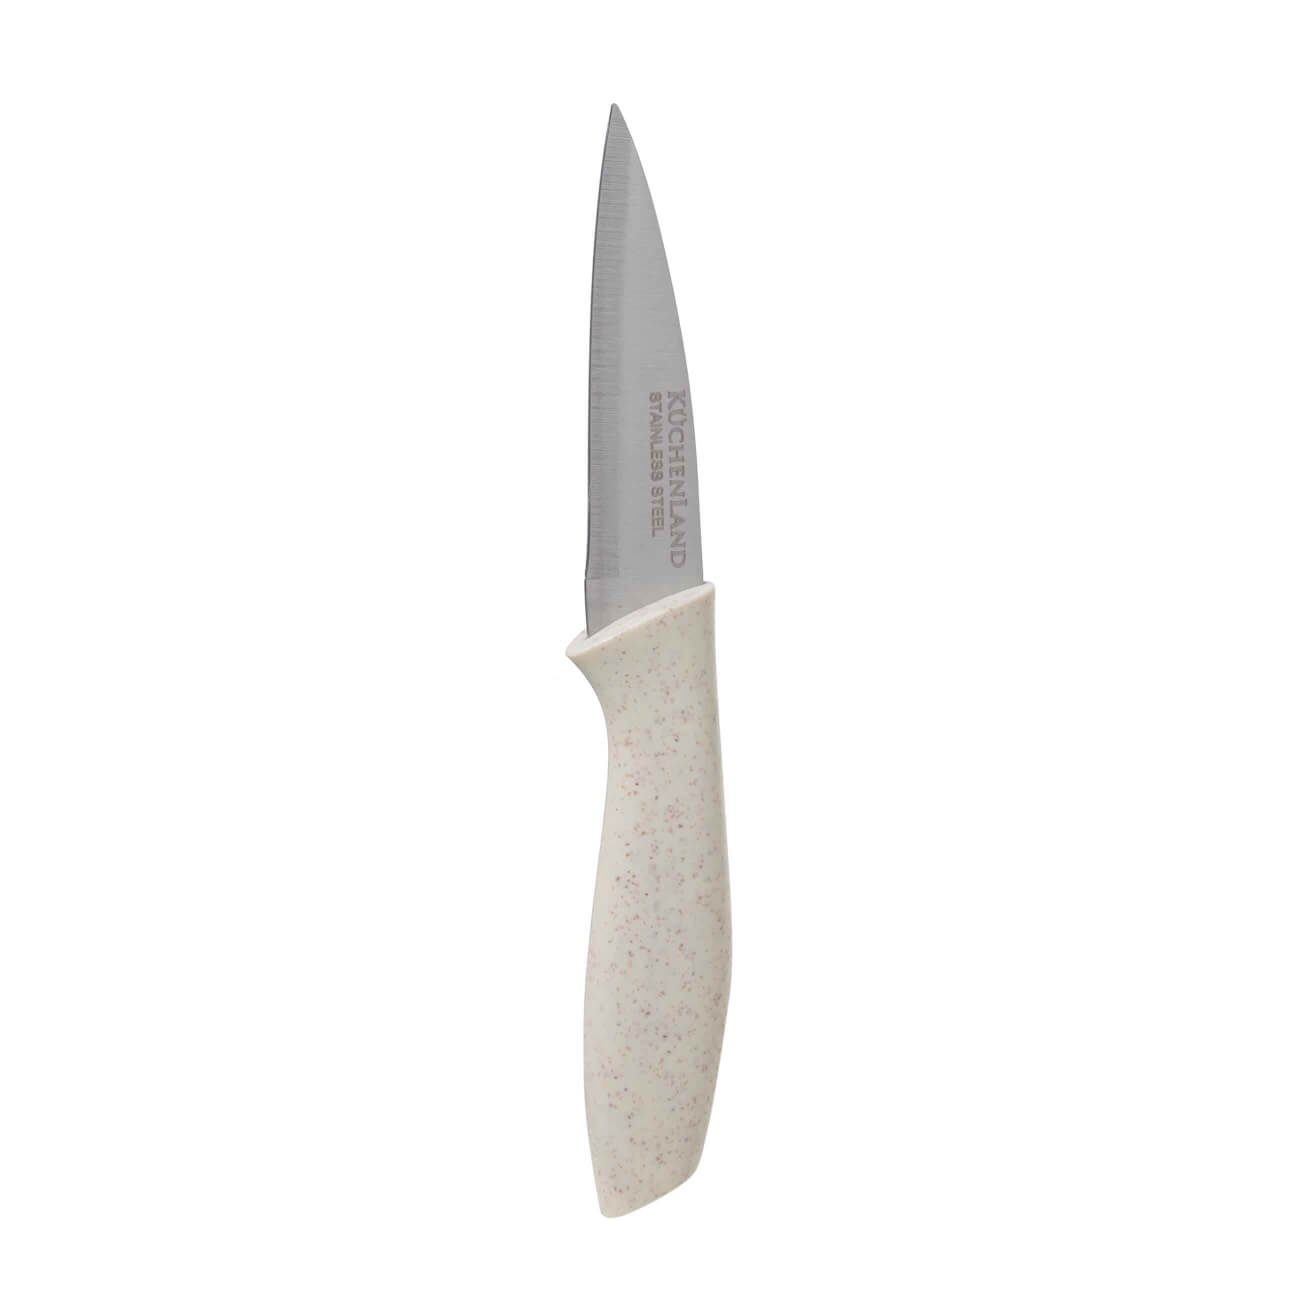 Нож для чистки овощей, 9 см, сталь/пластик, молочный, Speck-light нож для чистки овощей clasica 2557 100 мм